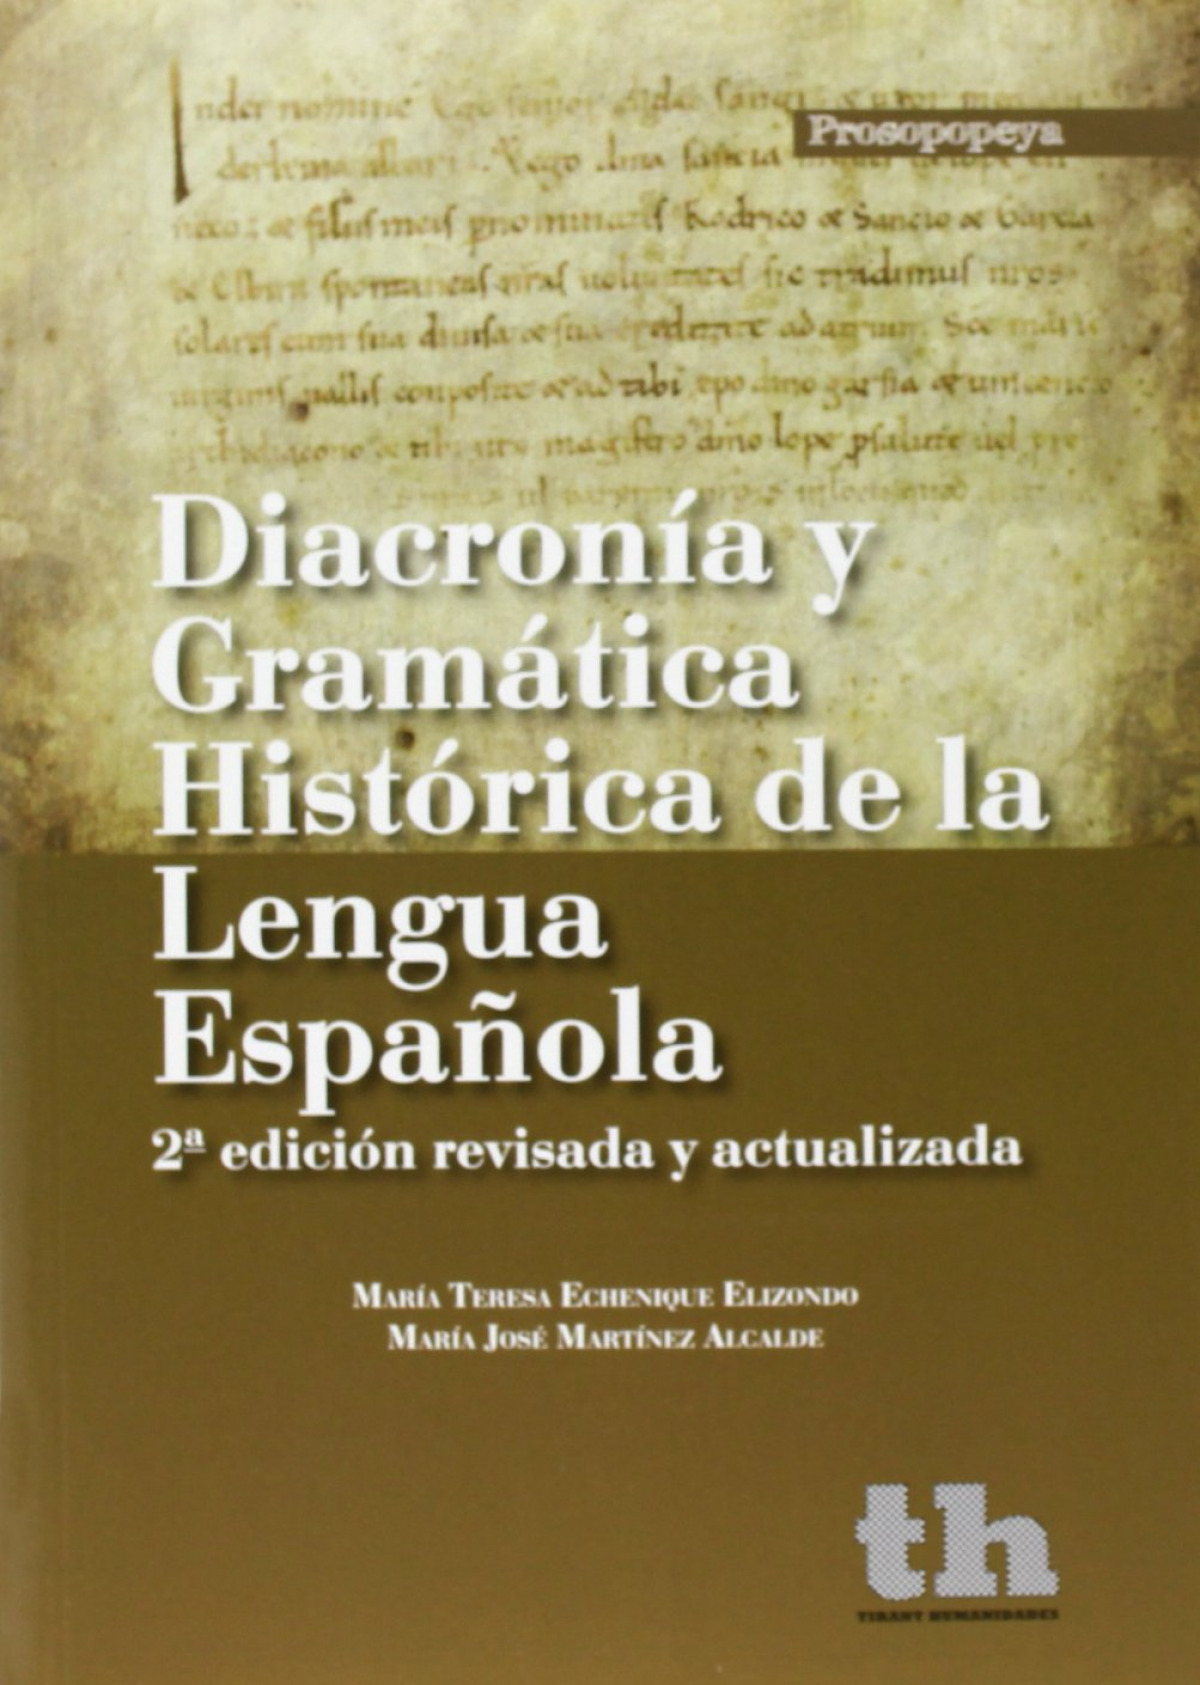 Diacronia y gramatica historica de la lengua espaÑola-2 ed. - Echenique,M.Teresa/ Martinez,M.Jose